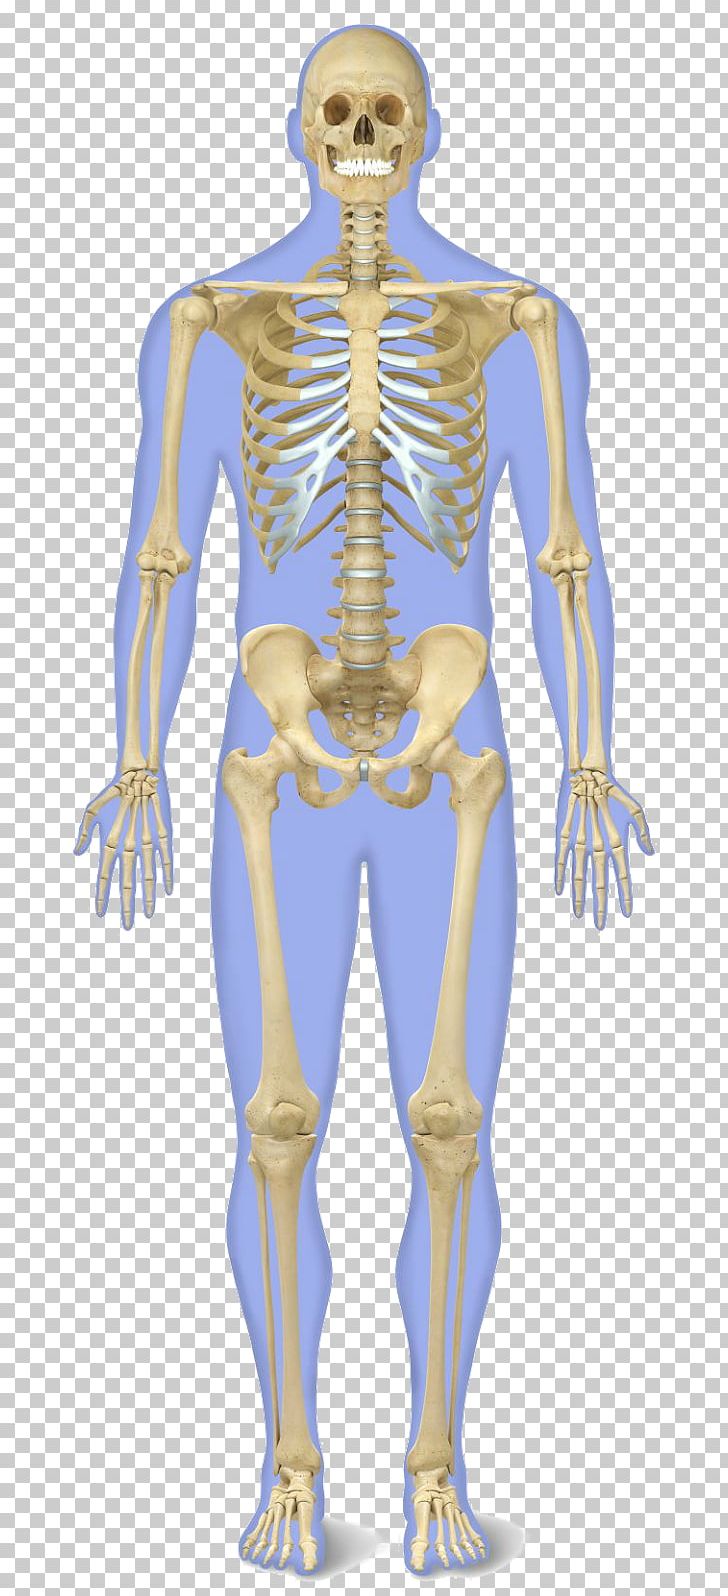 The Human Skeleton Human Body Anatomy PNG, Clipart, Abdomen, Arm, Back, Bone, Bones Free PNG Download